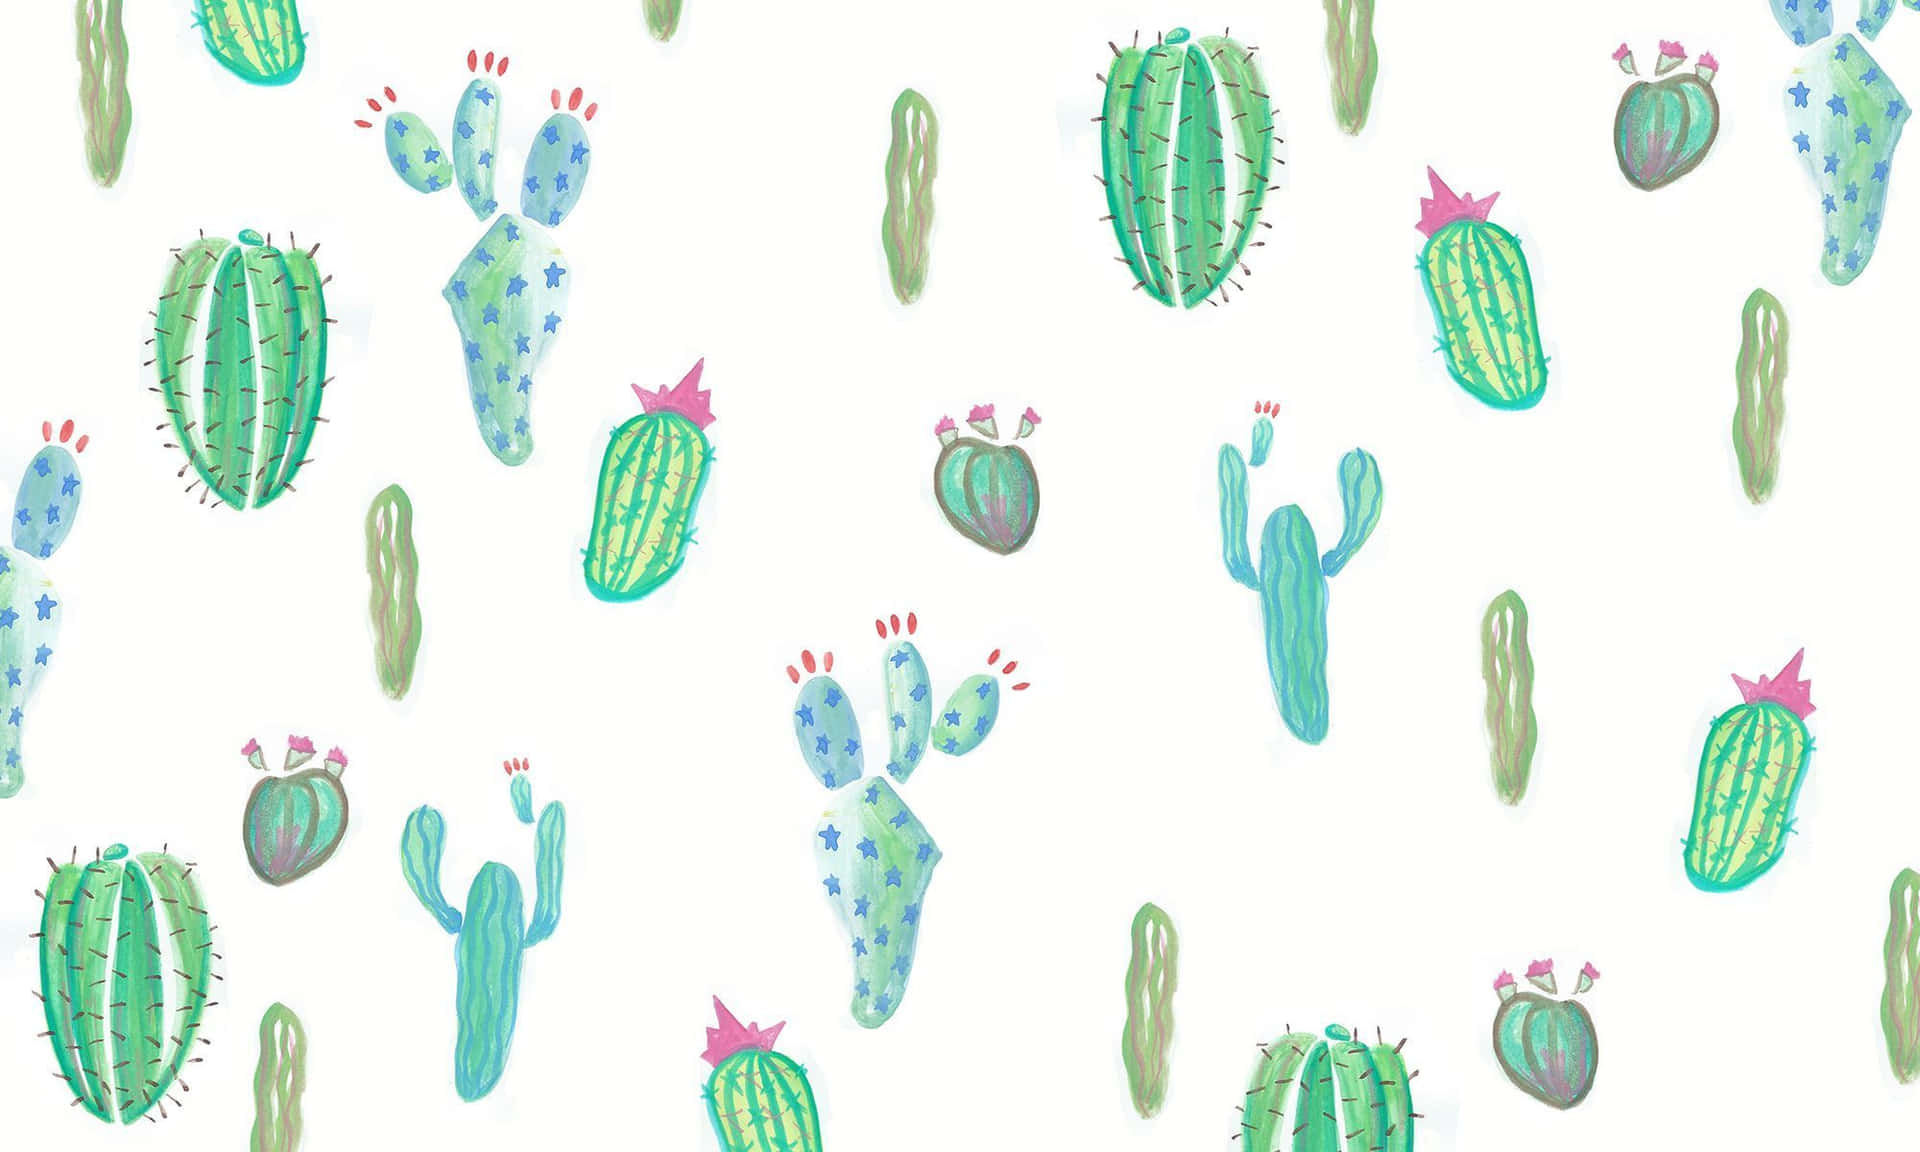 Cactus Background Images  Free Download on Freepik